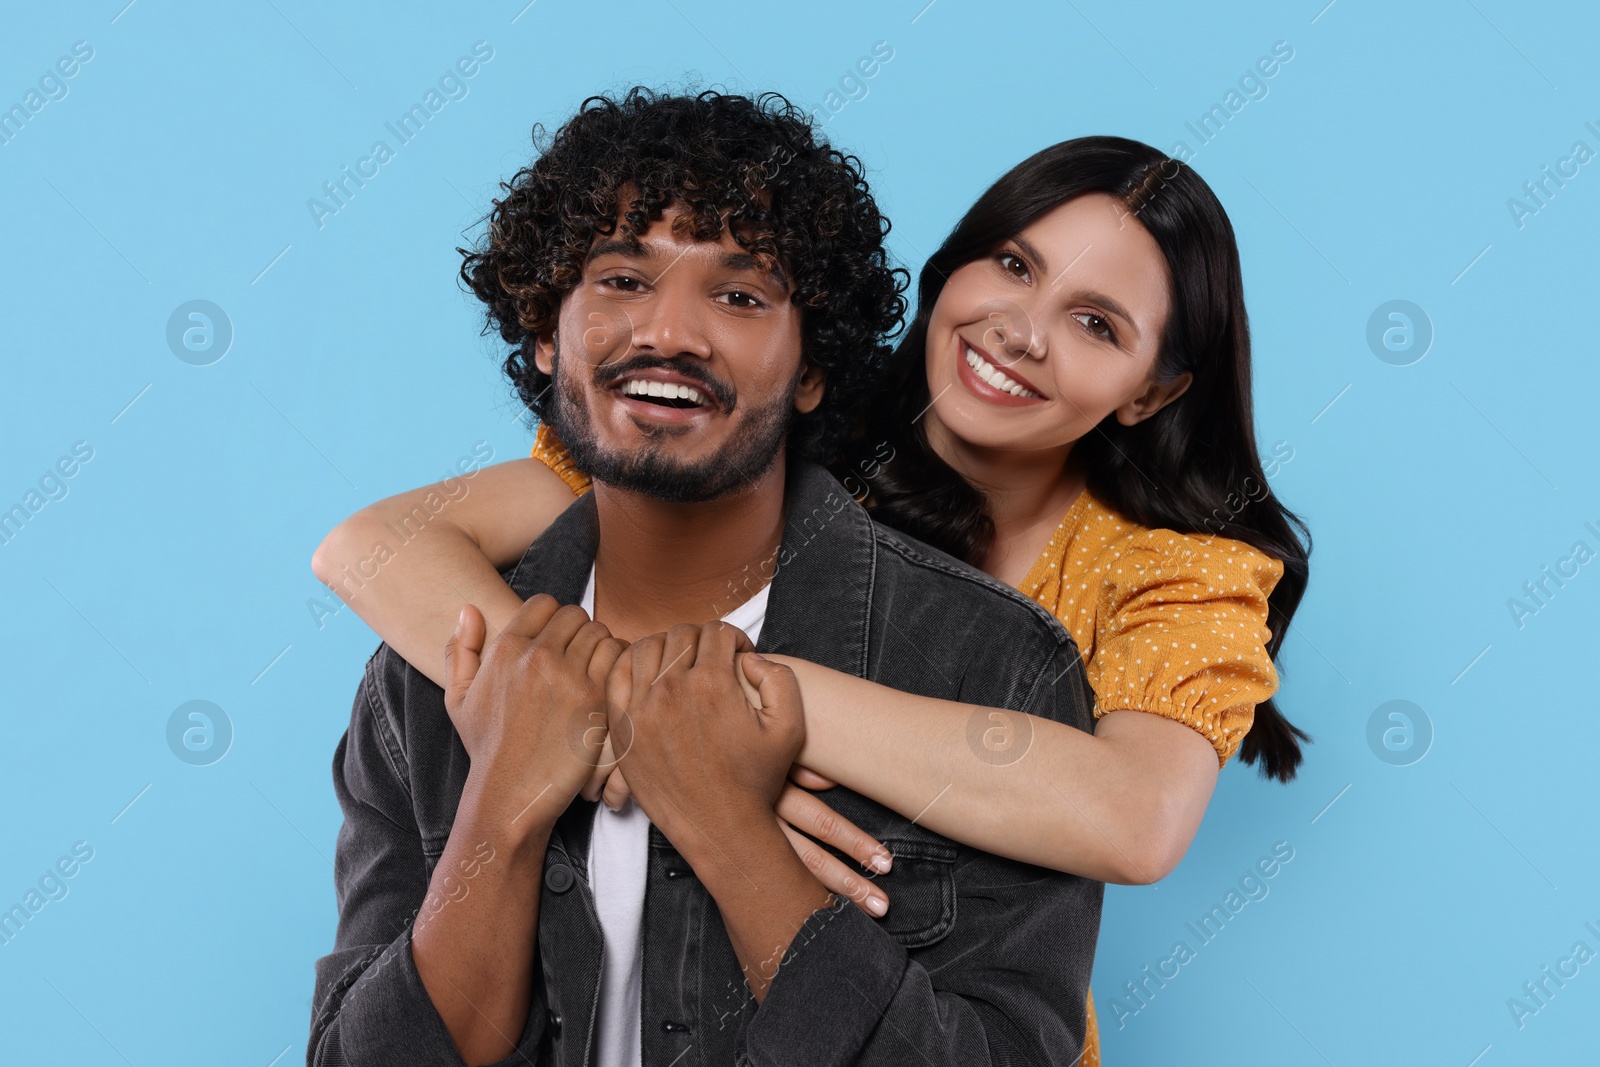 Photo of International dating. Happy couple hugging on light blue background